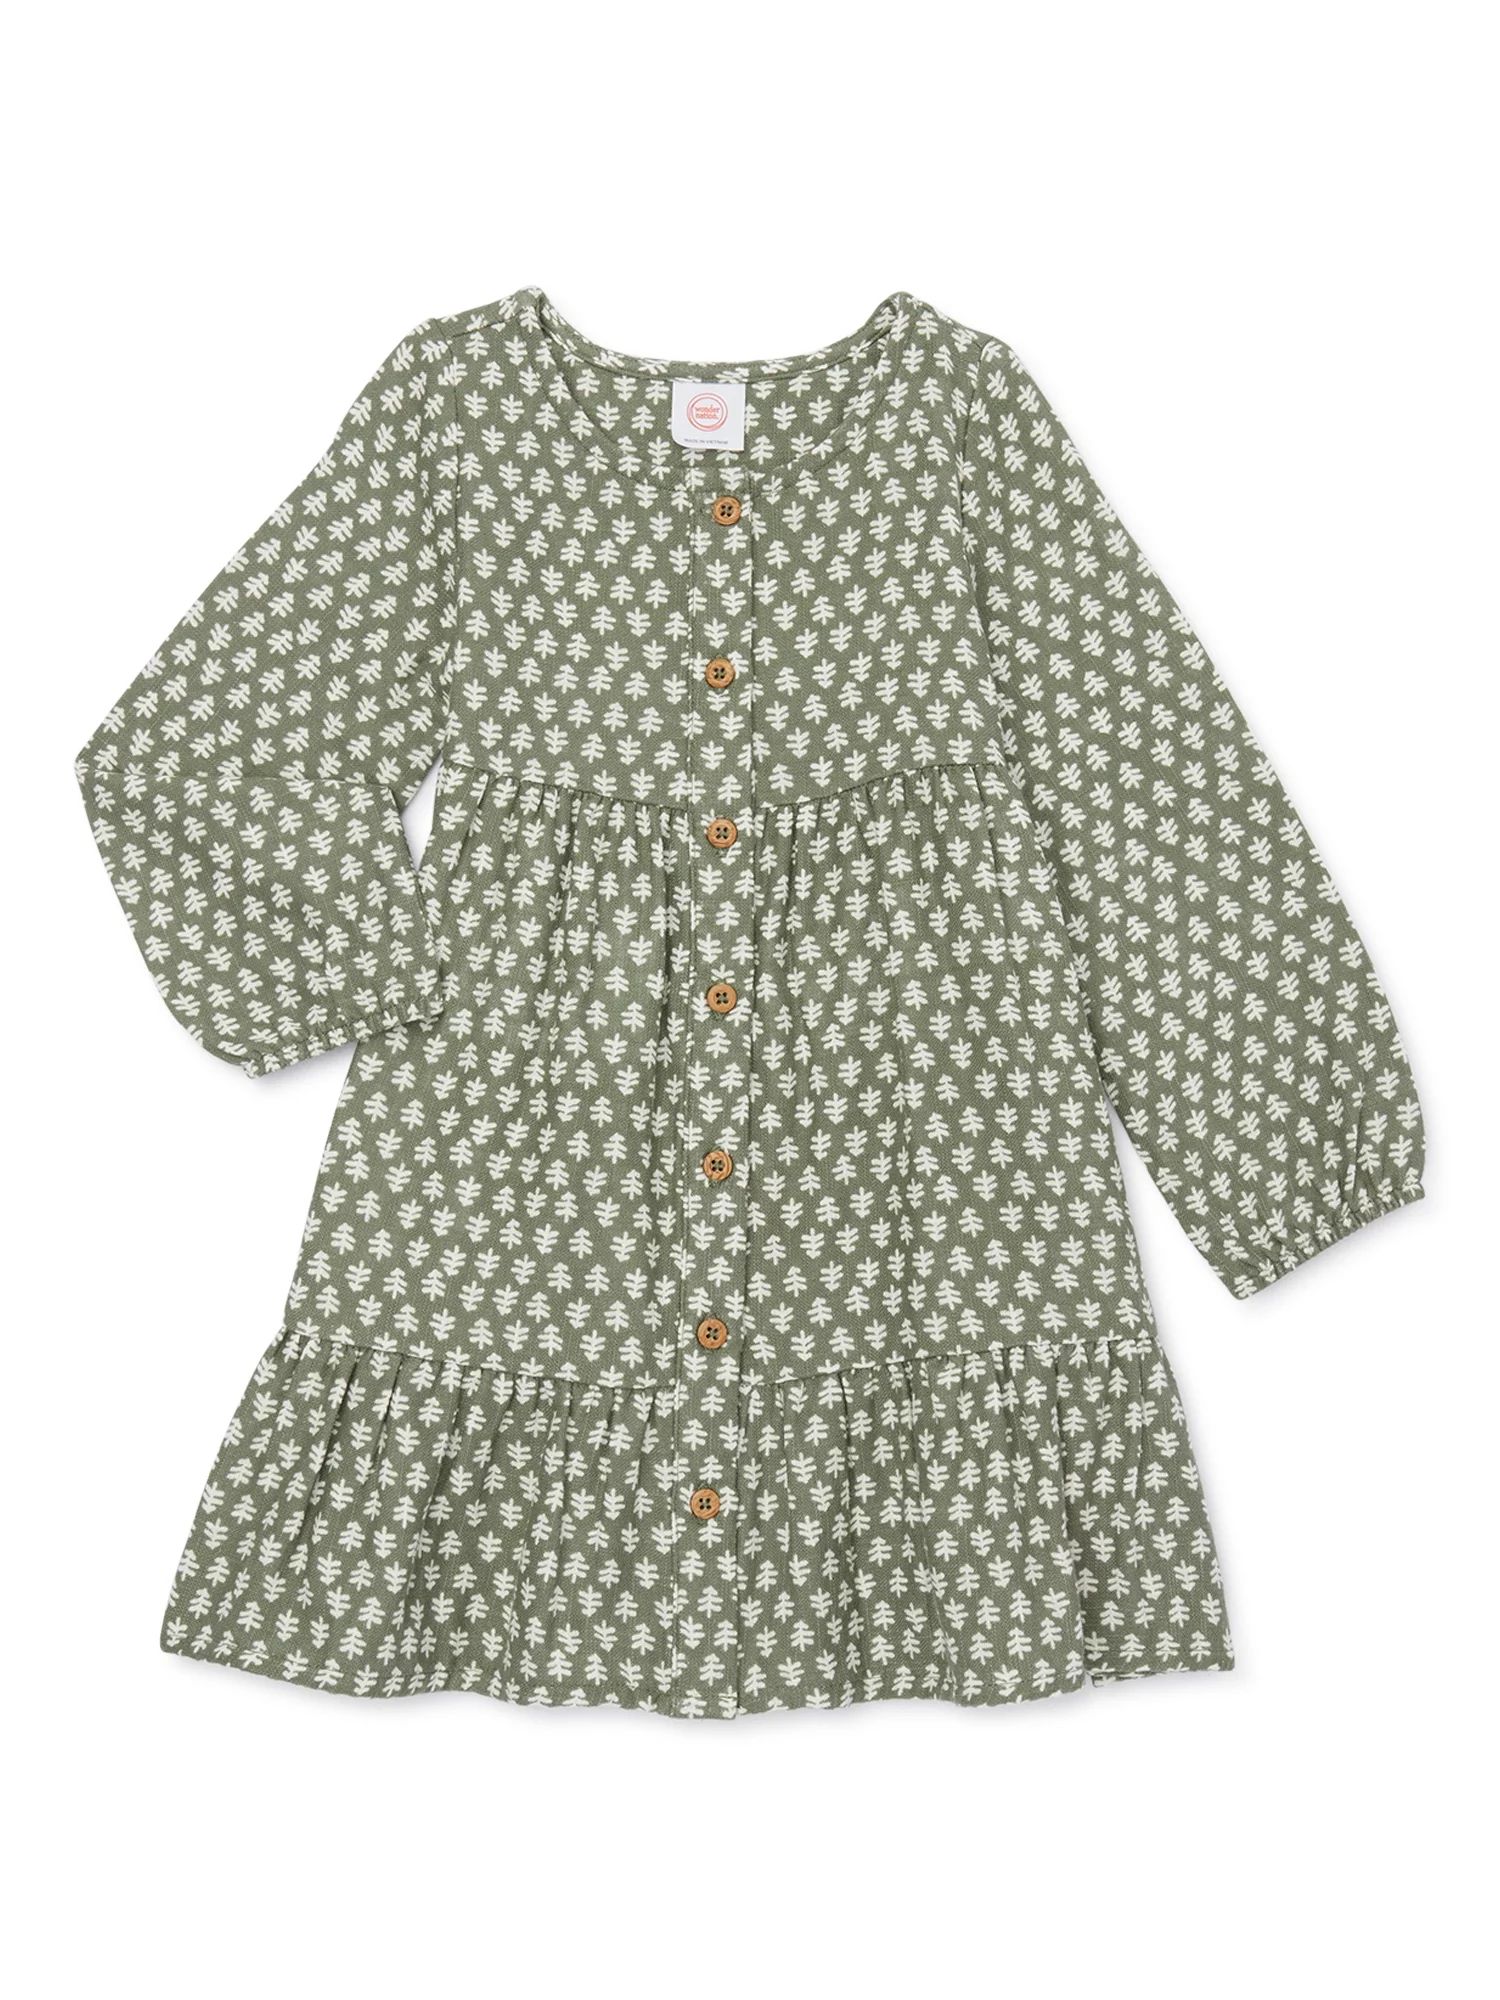 Wonder Nation Toddler Girls Long Sleeve Woven Dress, Sizes 12M-5T | Walmart (US)